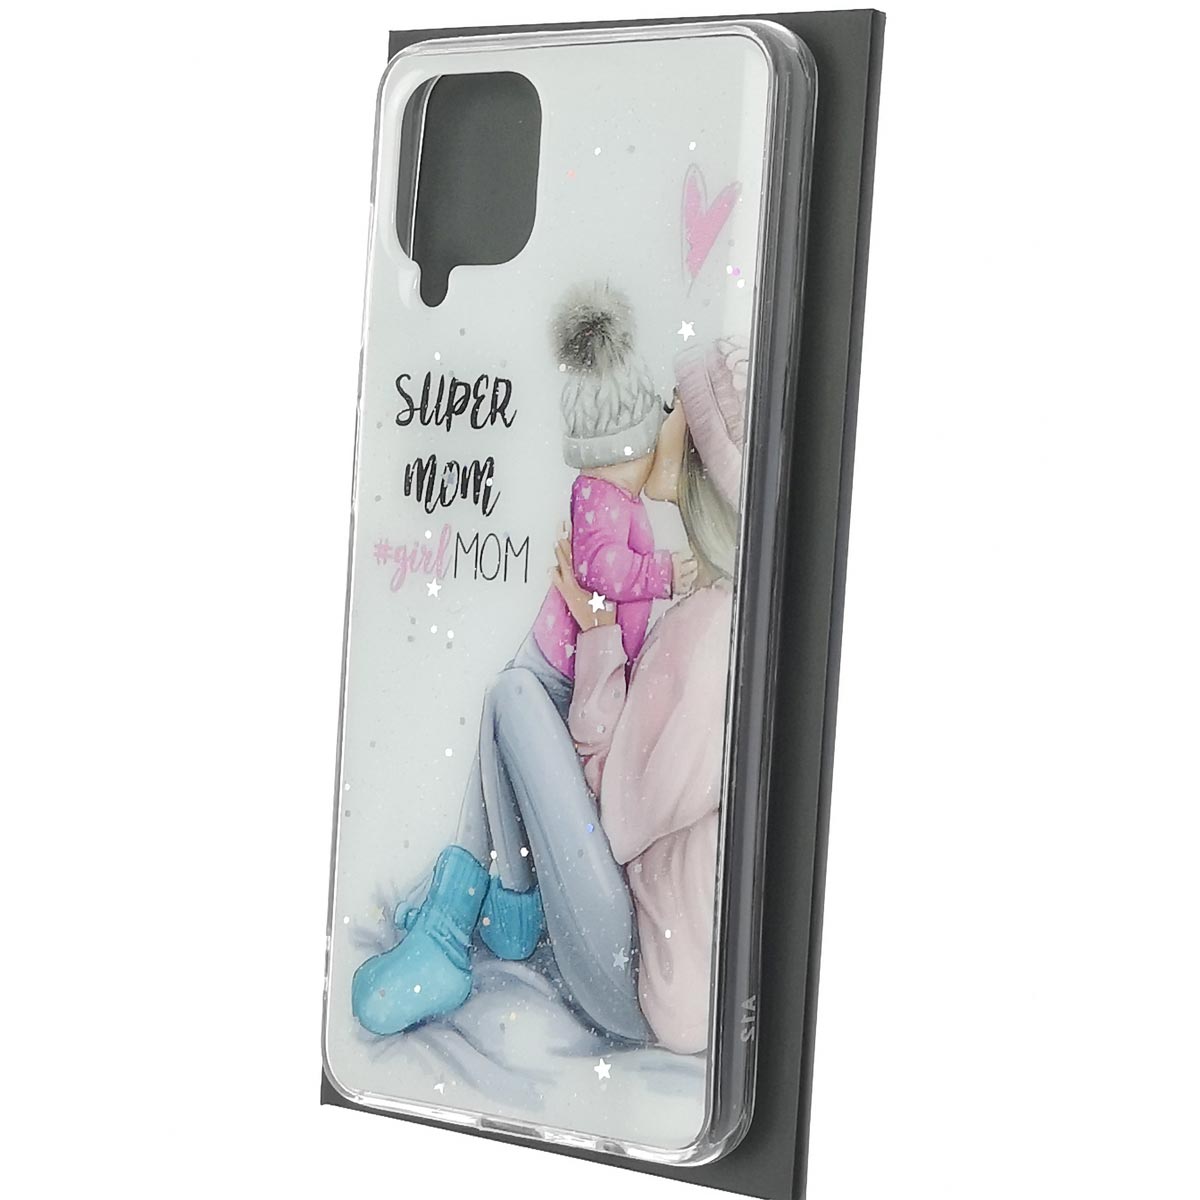 Чехол накладка Vinil для SAMSUNG Galaxy A12 (SM-A125), силикон, блестки, глянцевый, рисунок Super mom girl MOM